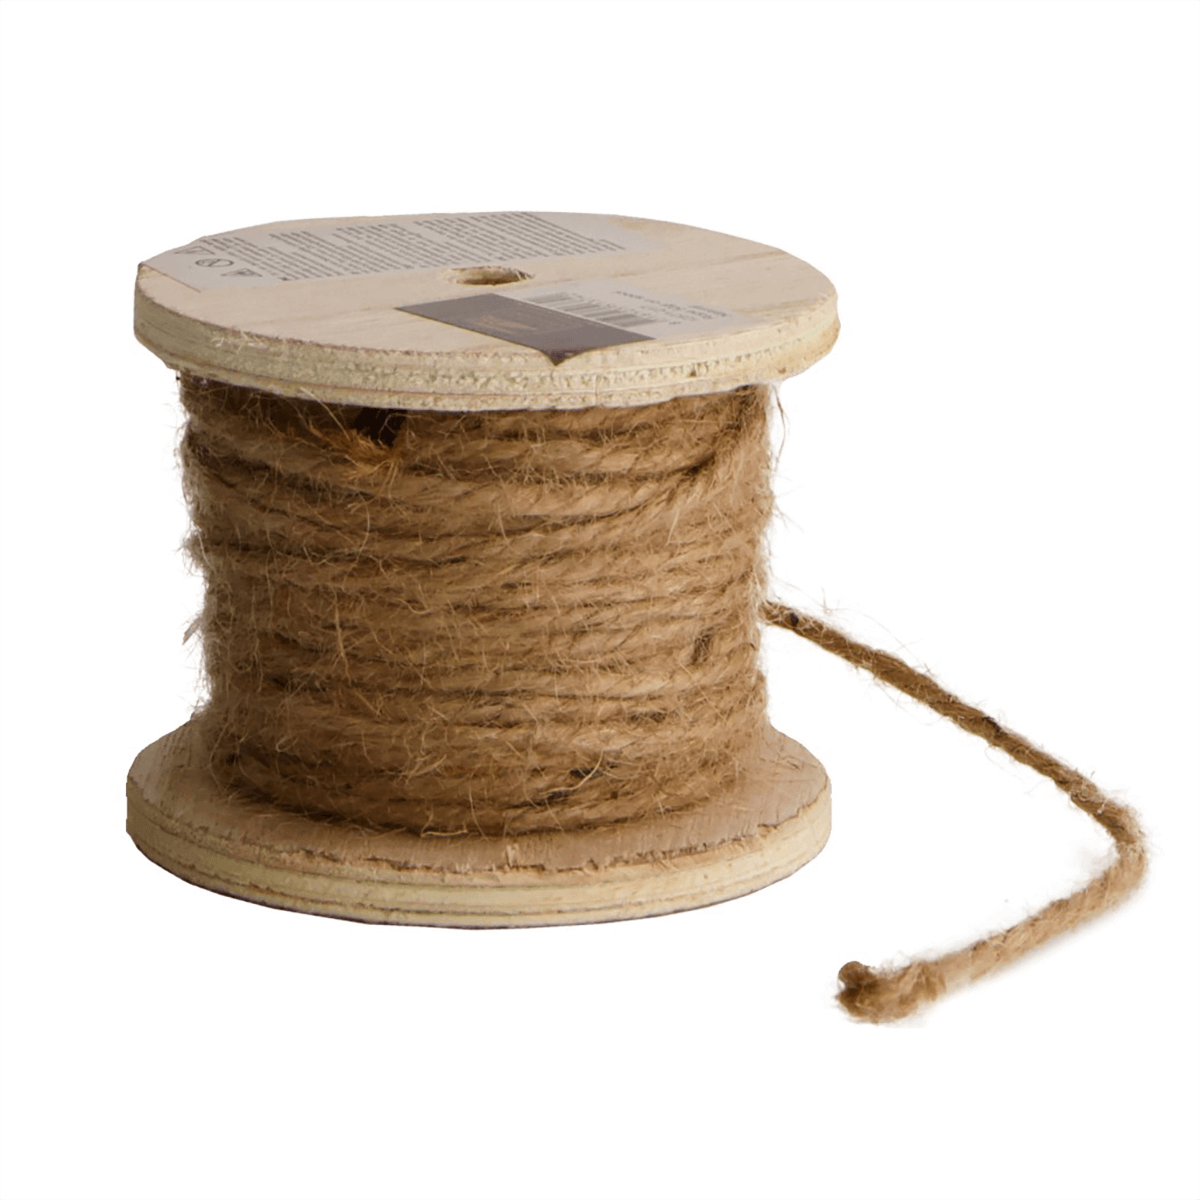 Hemp rope, hemp cord on wooden spool approx. 16 m long 50 g